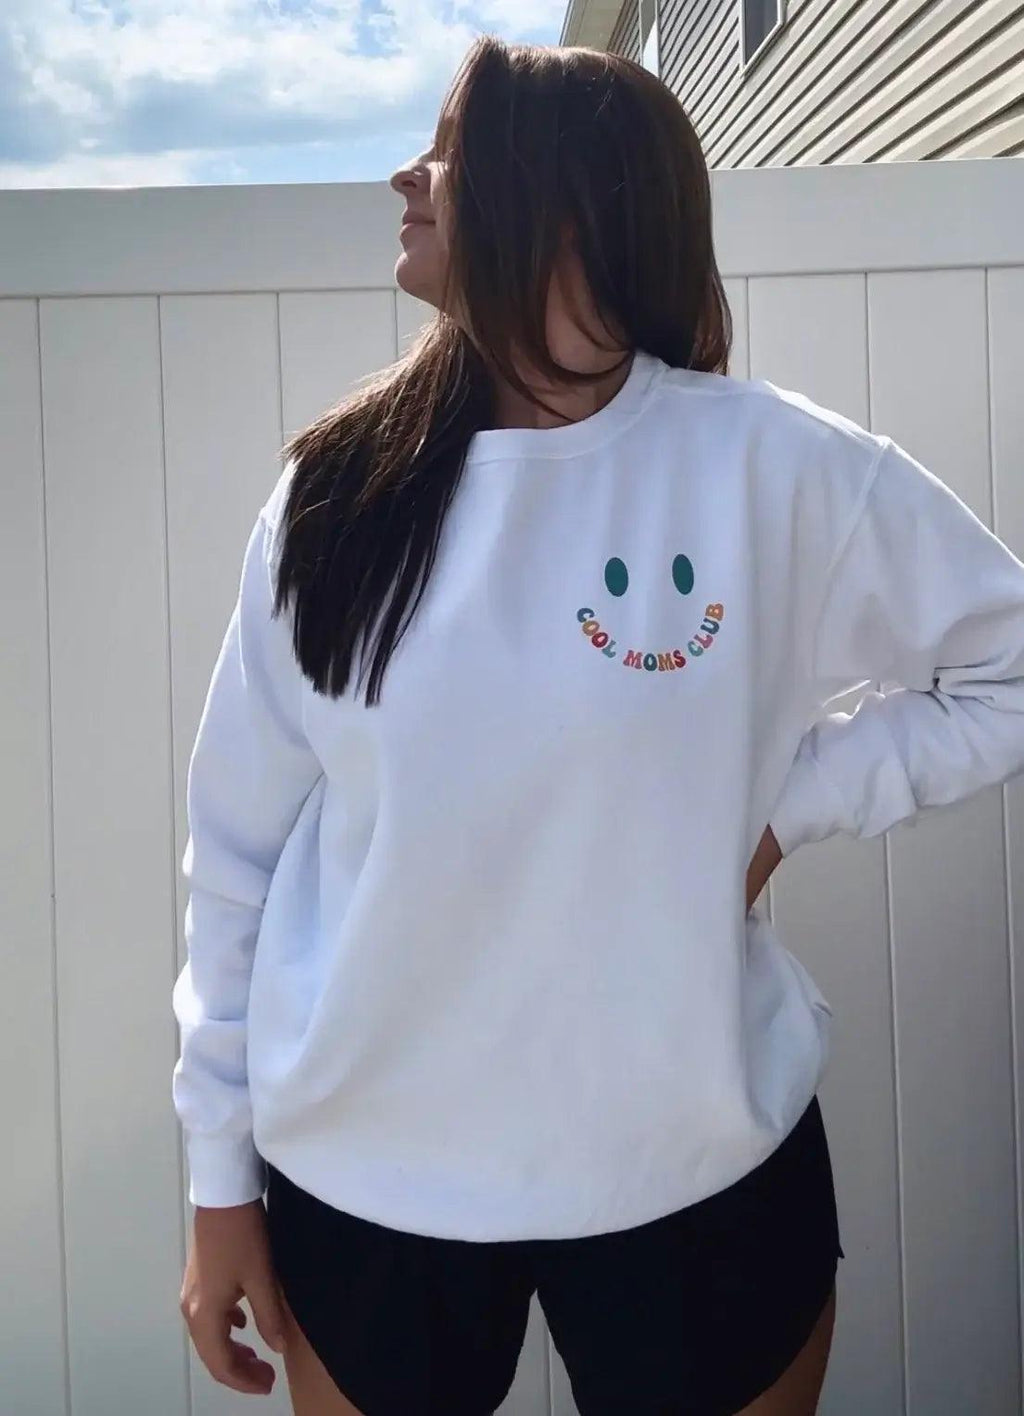 Cool Moms Club Sweatshirt | Front + Back Design